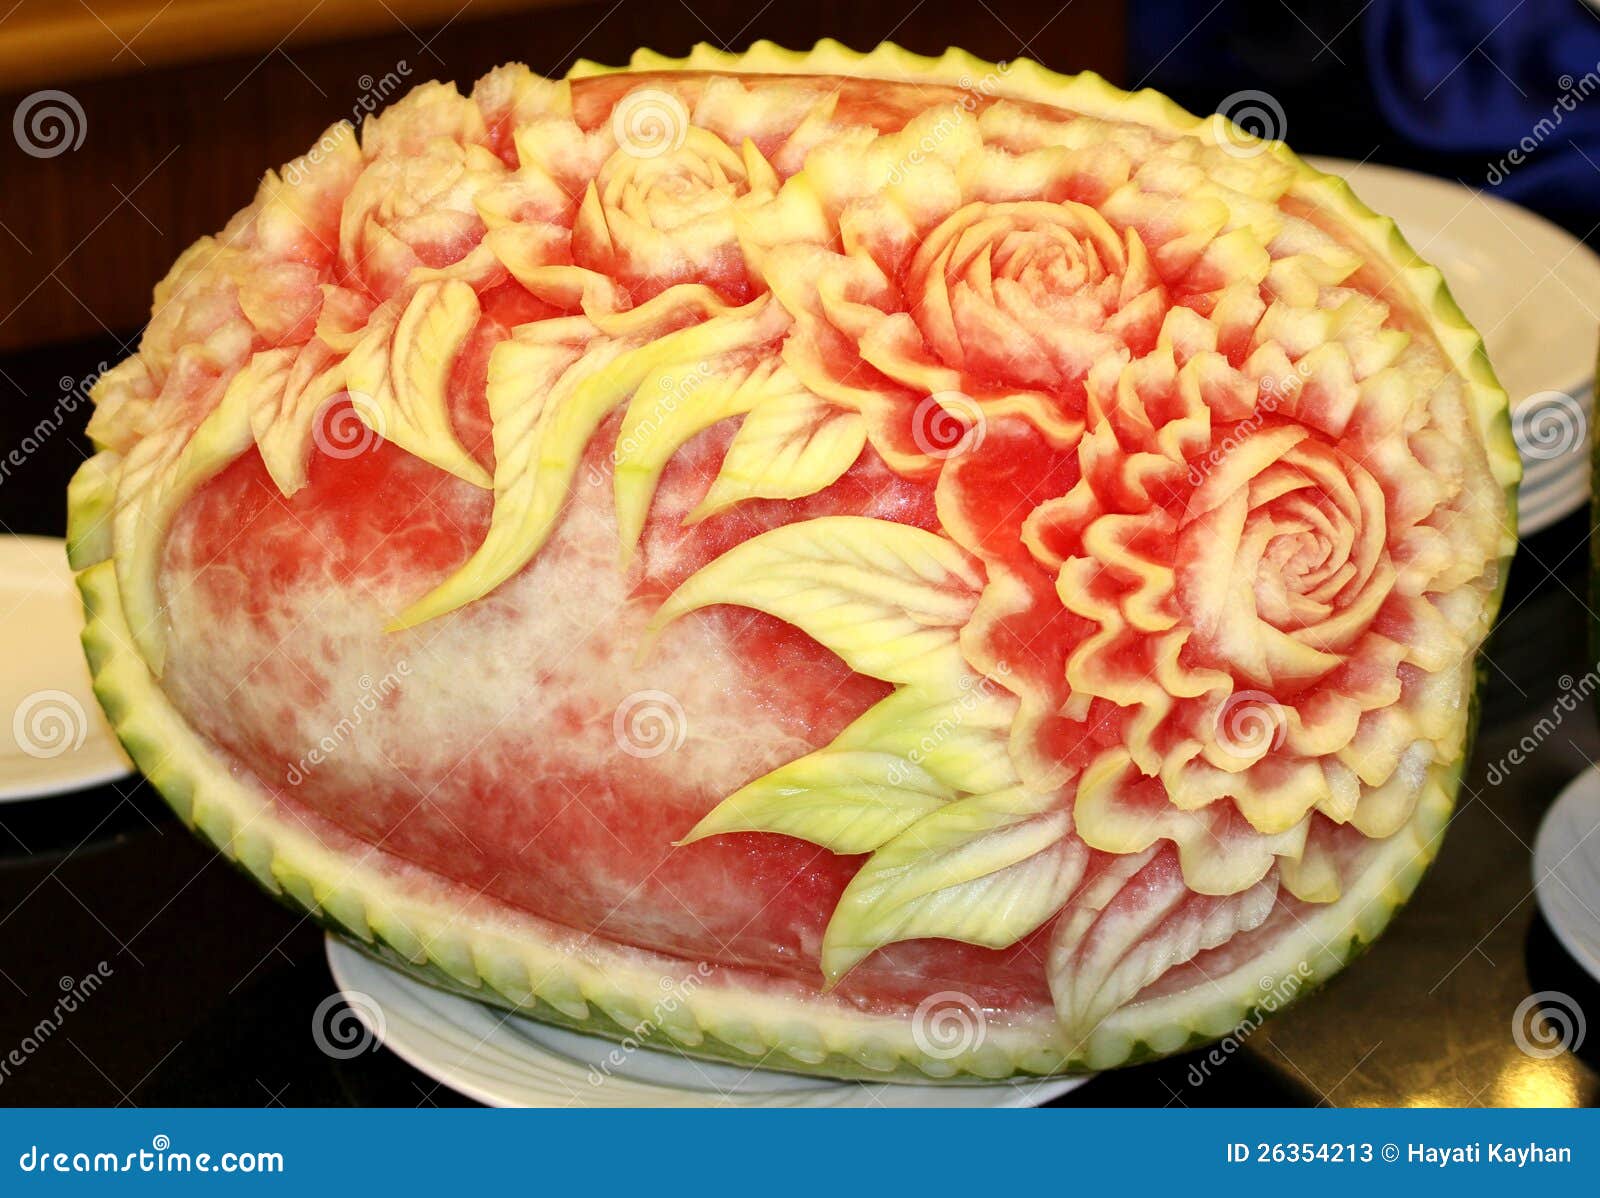 watermelon carving art